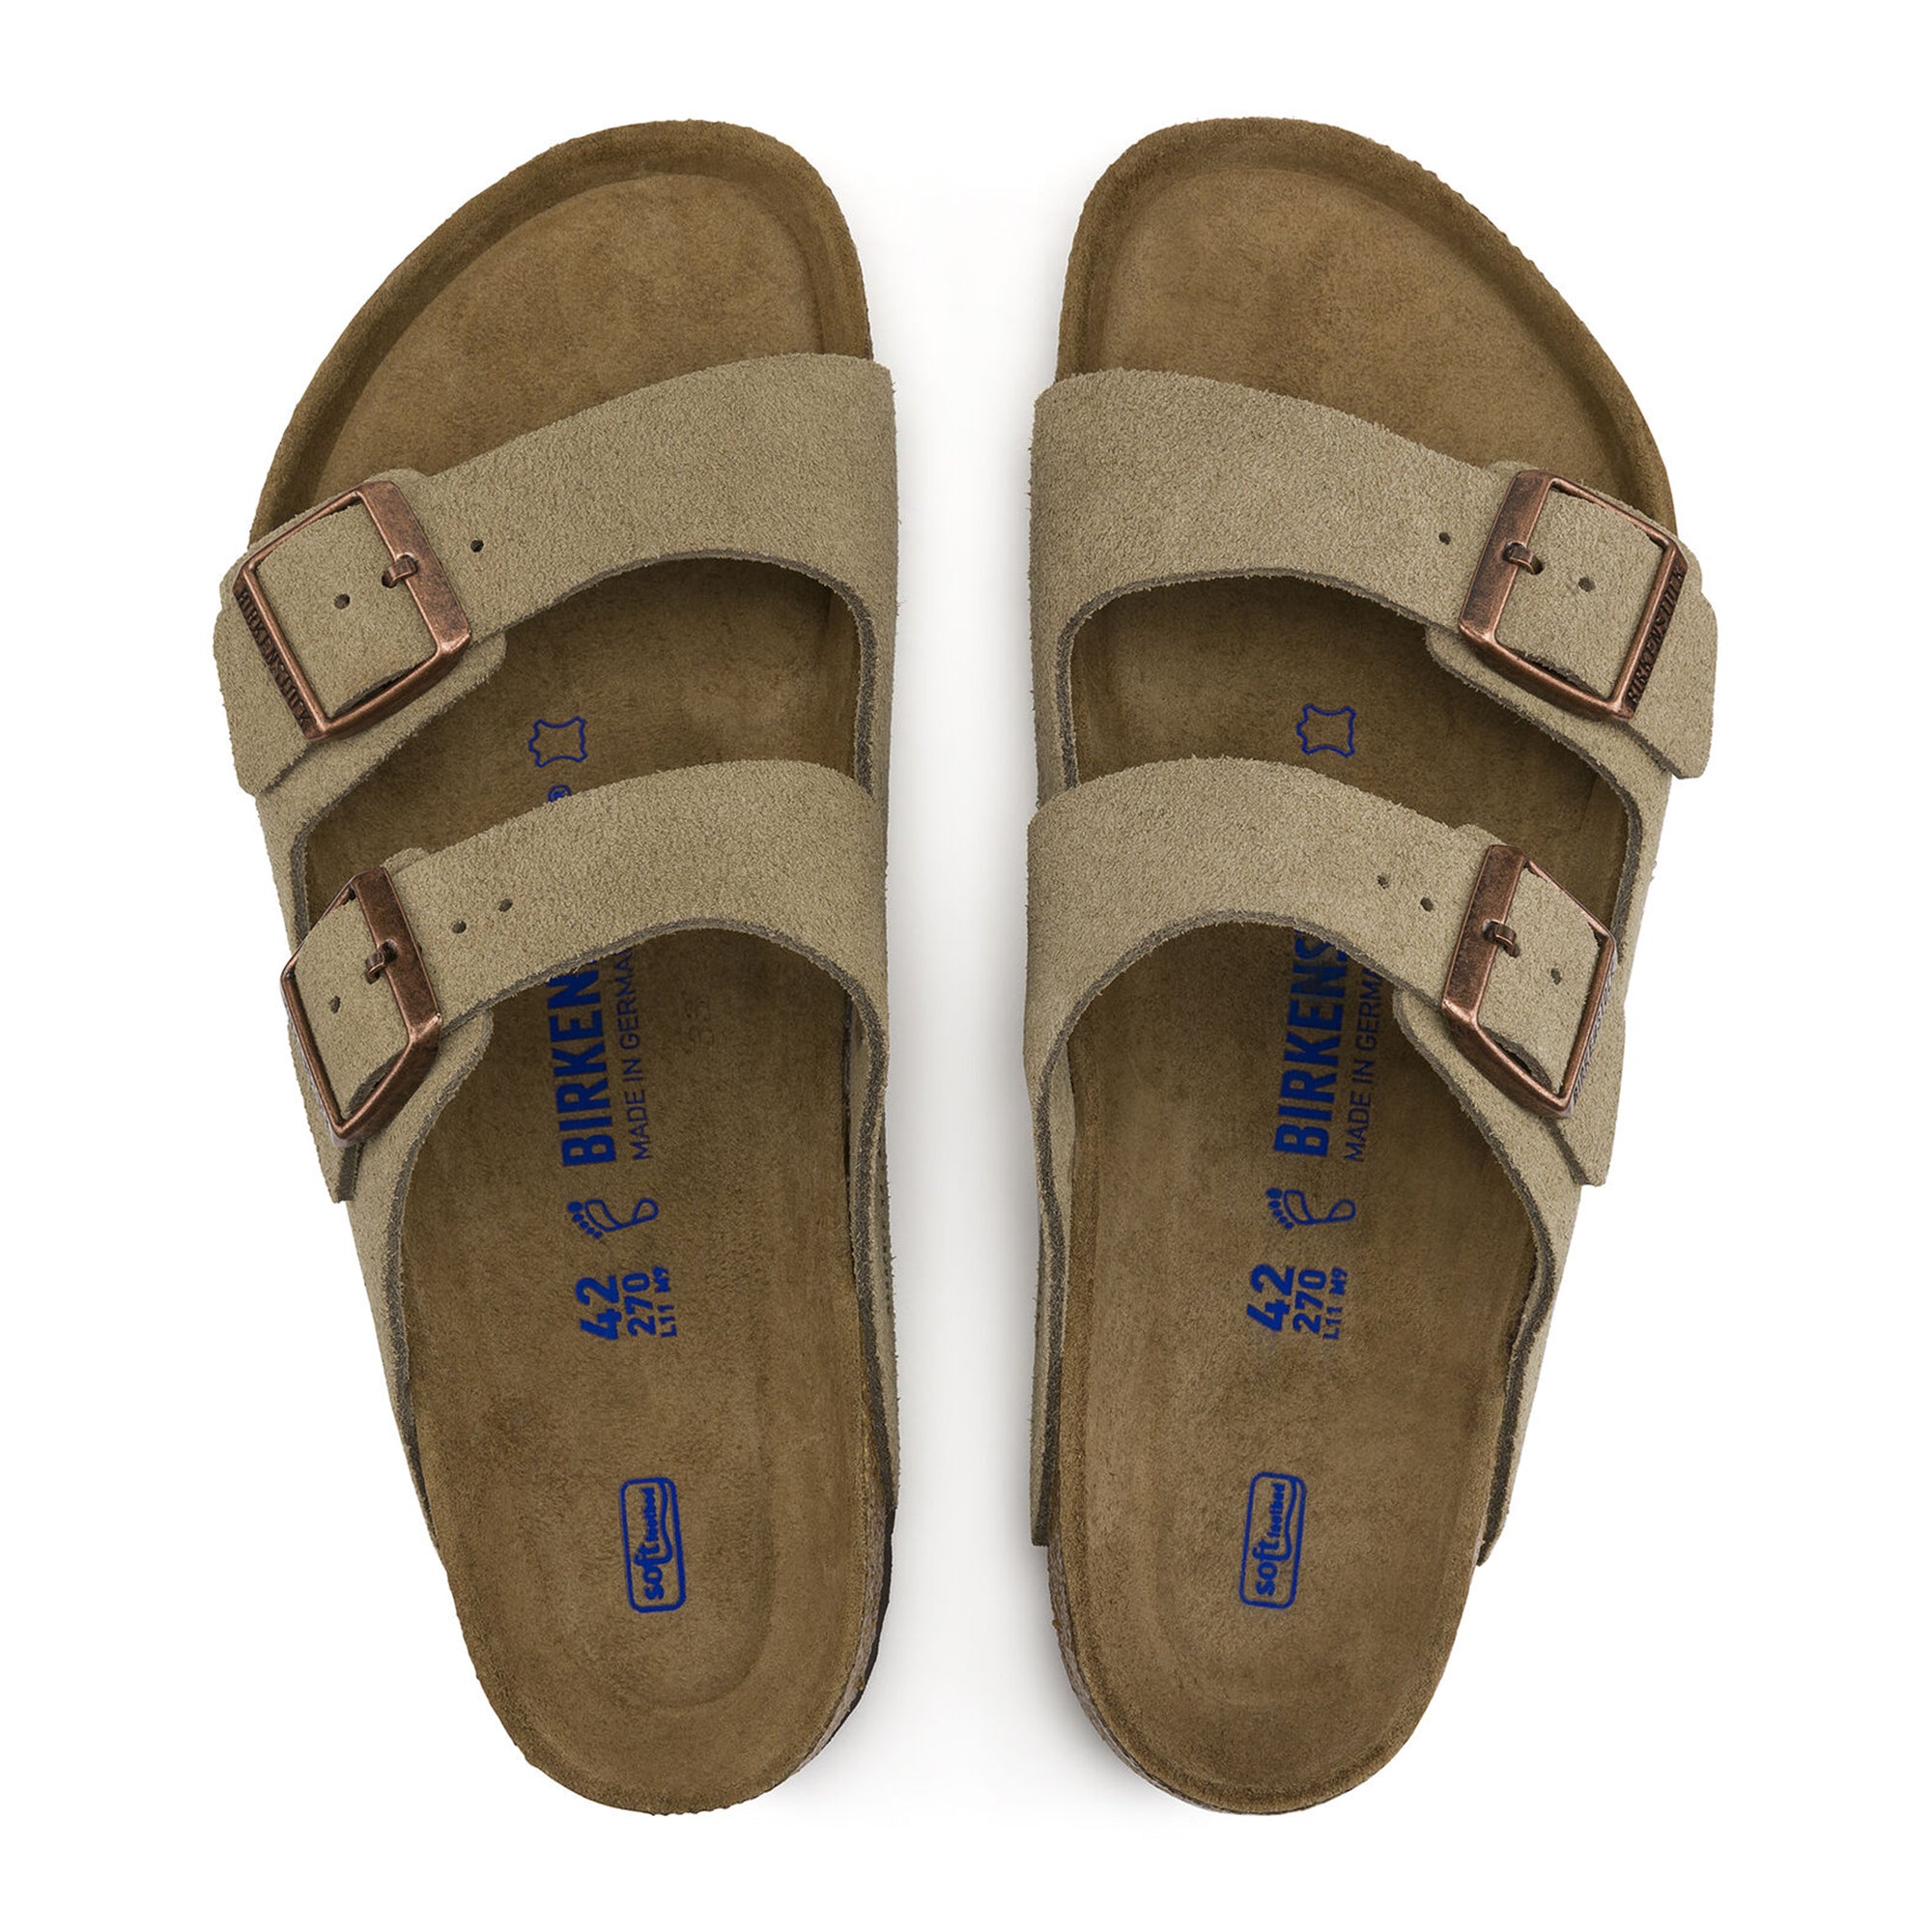 Birkenstock Arizona SFB Sandals - Taupe Suede